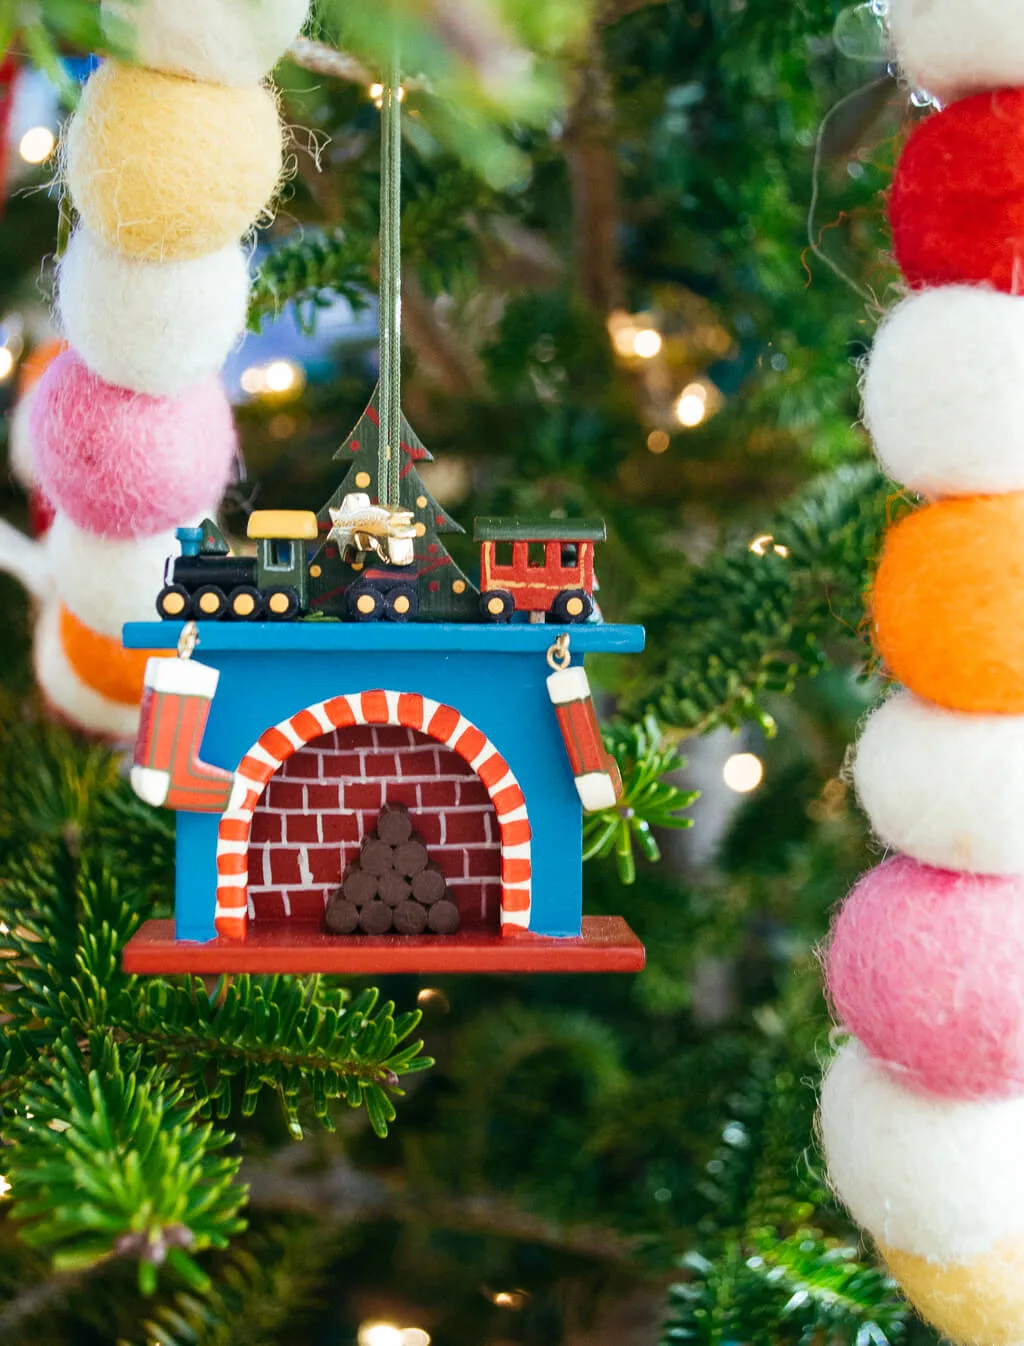 Wooden fireplace German Christmas ornament with trains and stockings #christmas #christmasornament #german